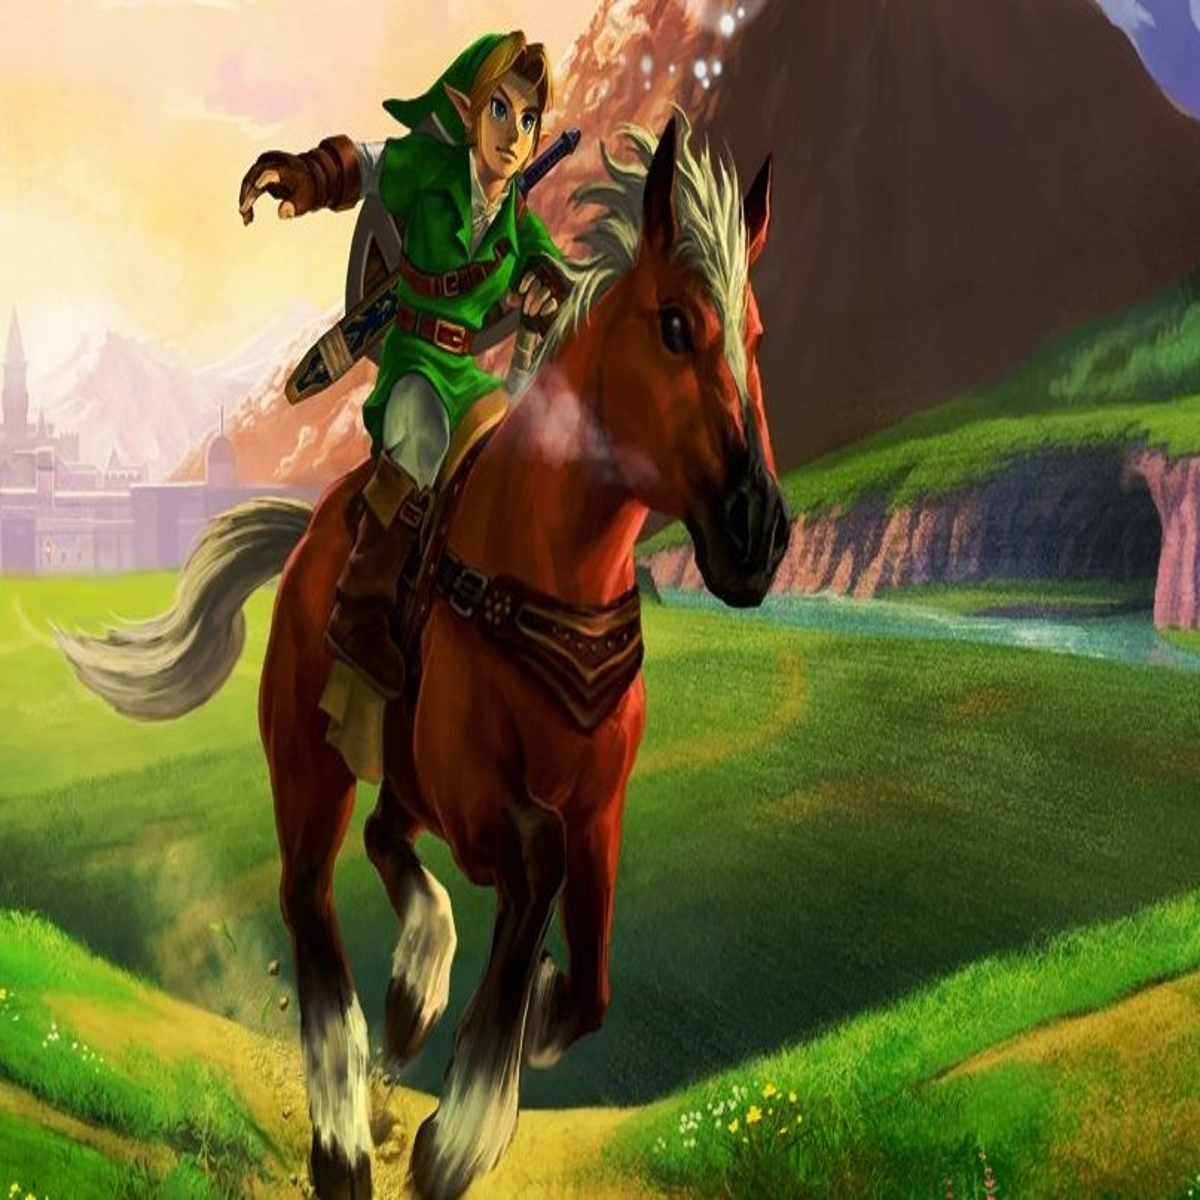 Zelda: Ocarina of Time Wii U Virtual Console trailer (Europe) 